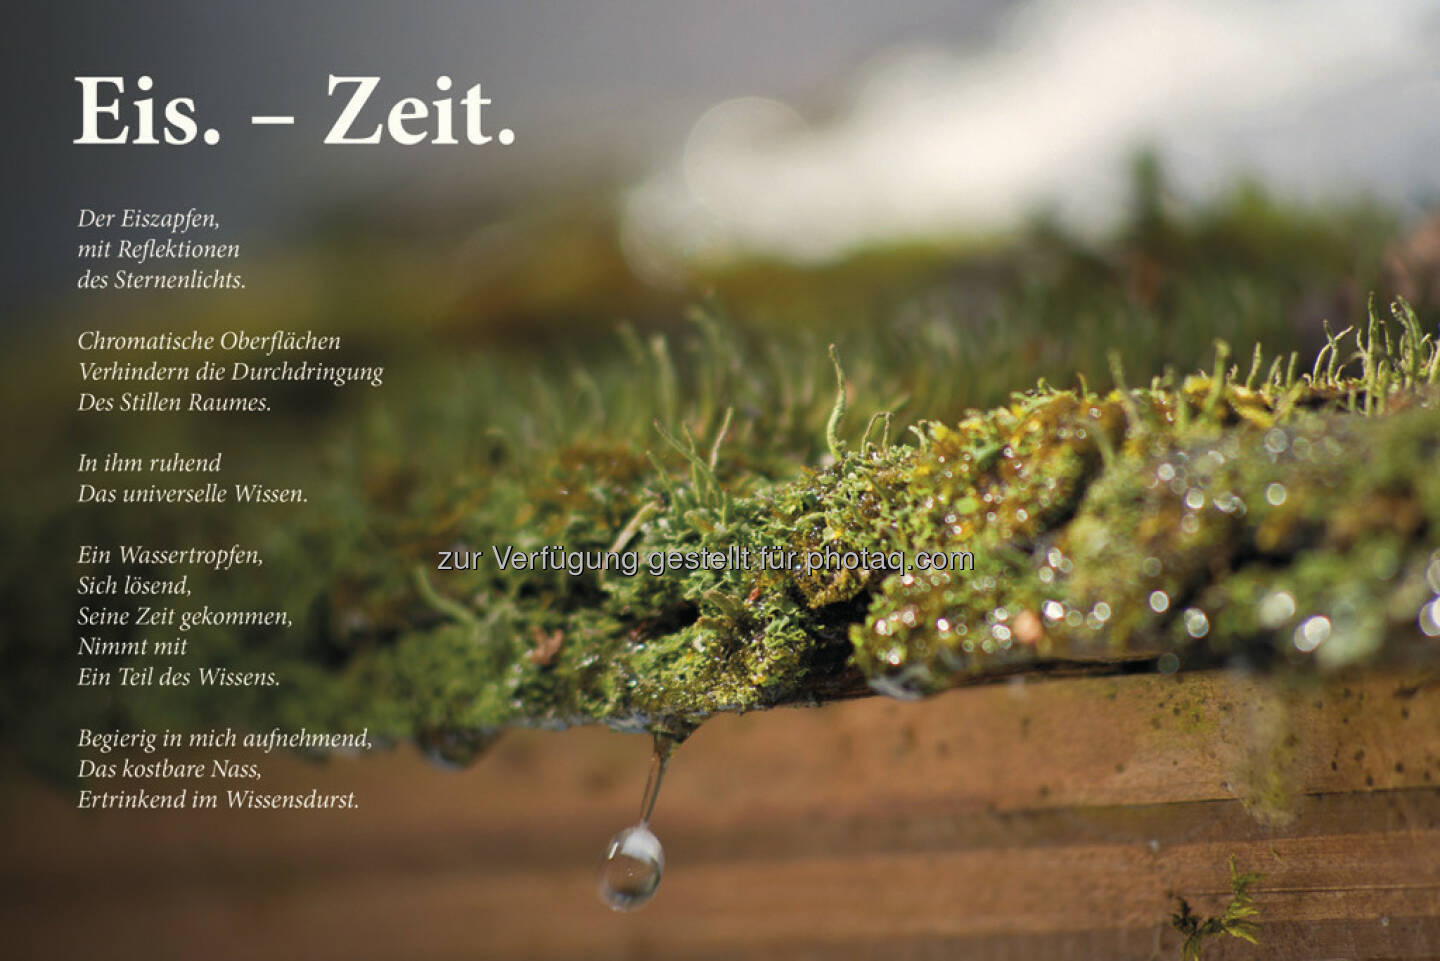 Eis. - Zeit, by Detlef Löffler, http://loefflerpix.com/